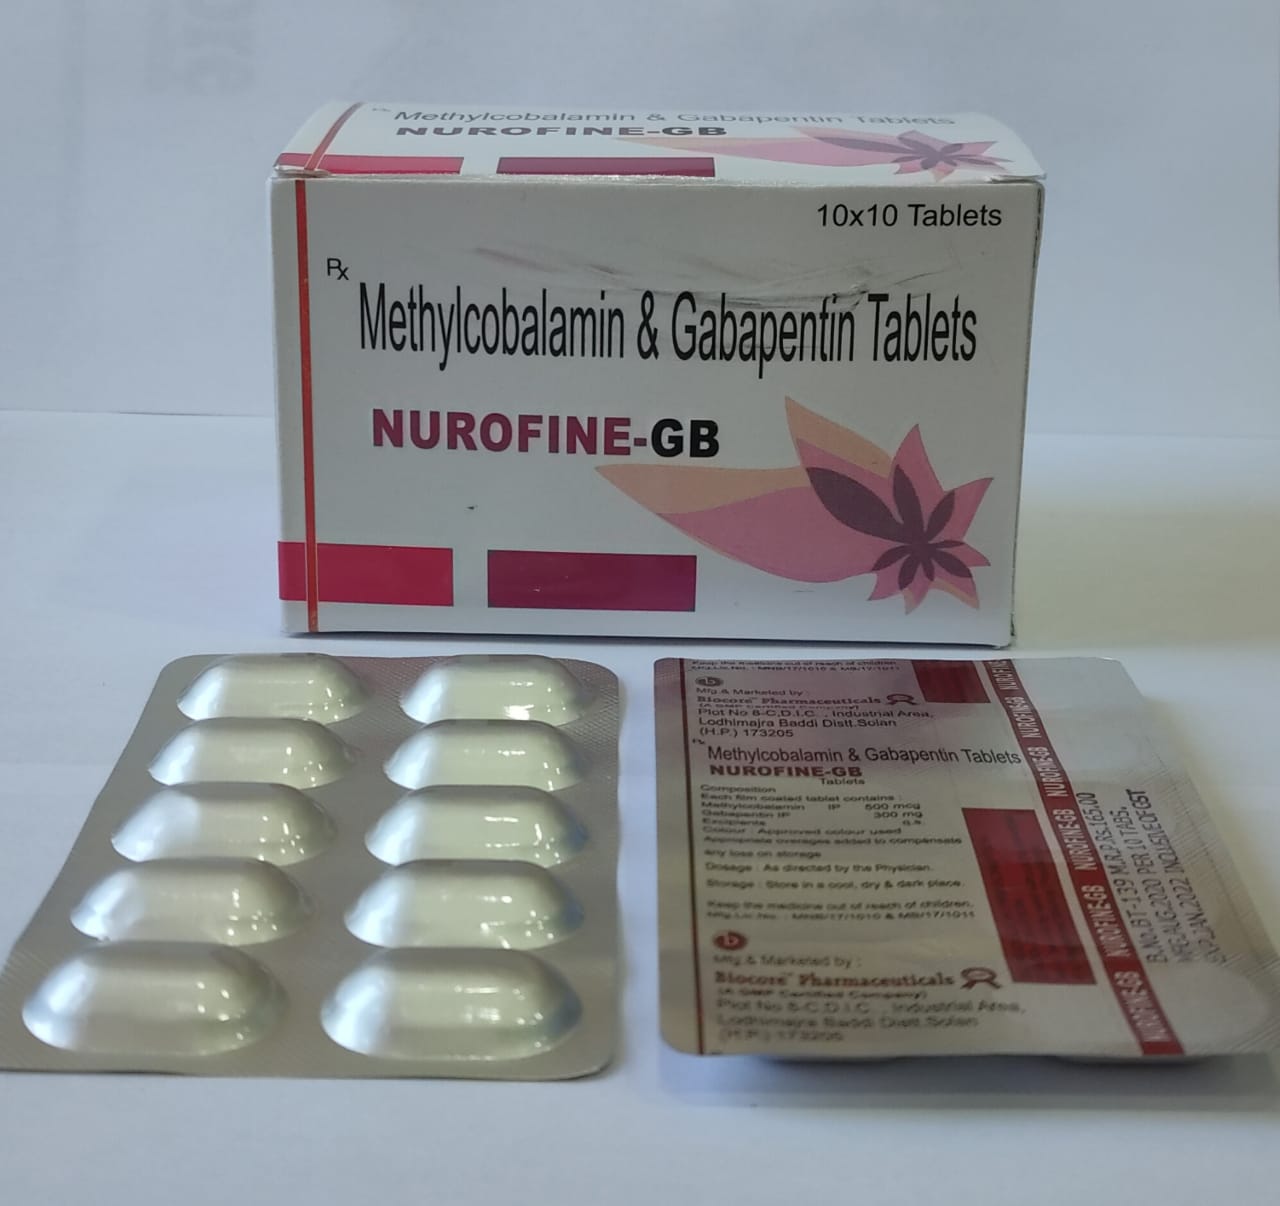 NUROFINE-GB Tablets